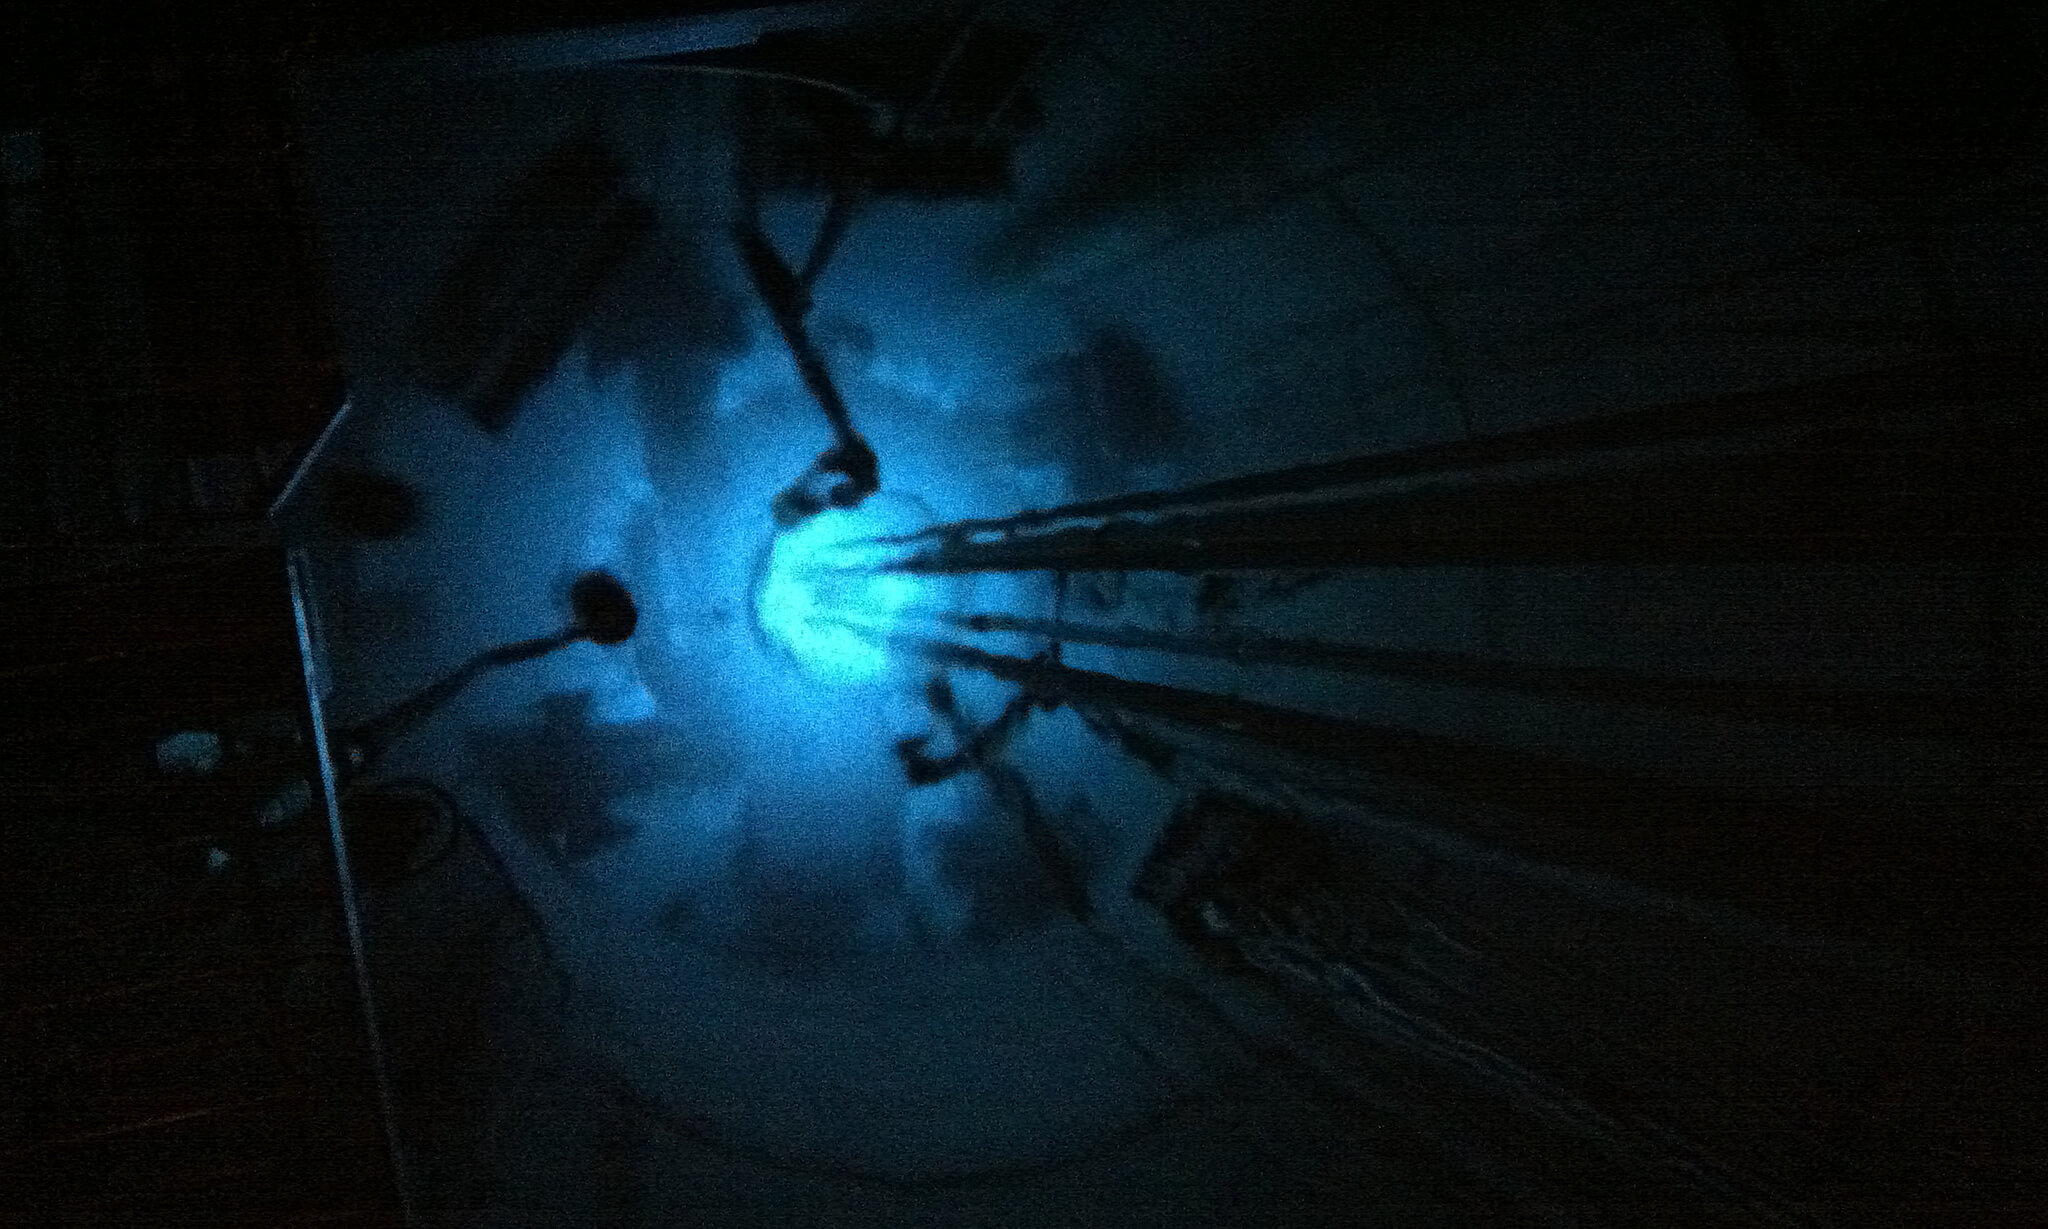 Pohled do jaderného reaktoru na Čerenkovovo záření; Autor: Rob Custodio Zdroj: Flickr